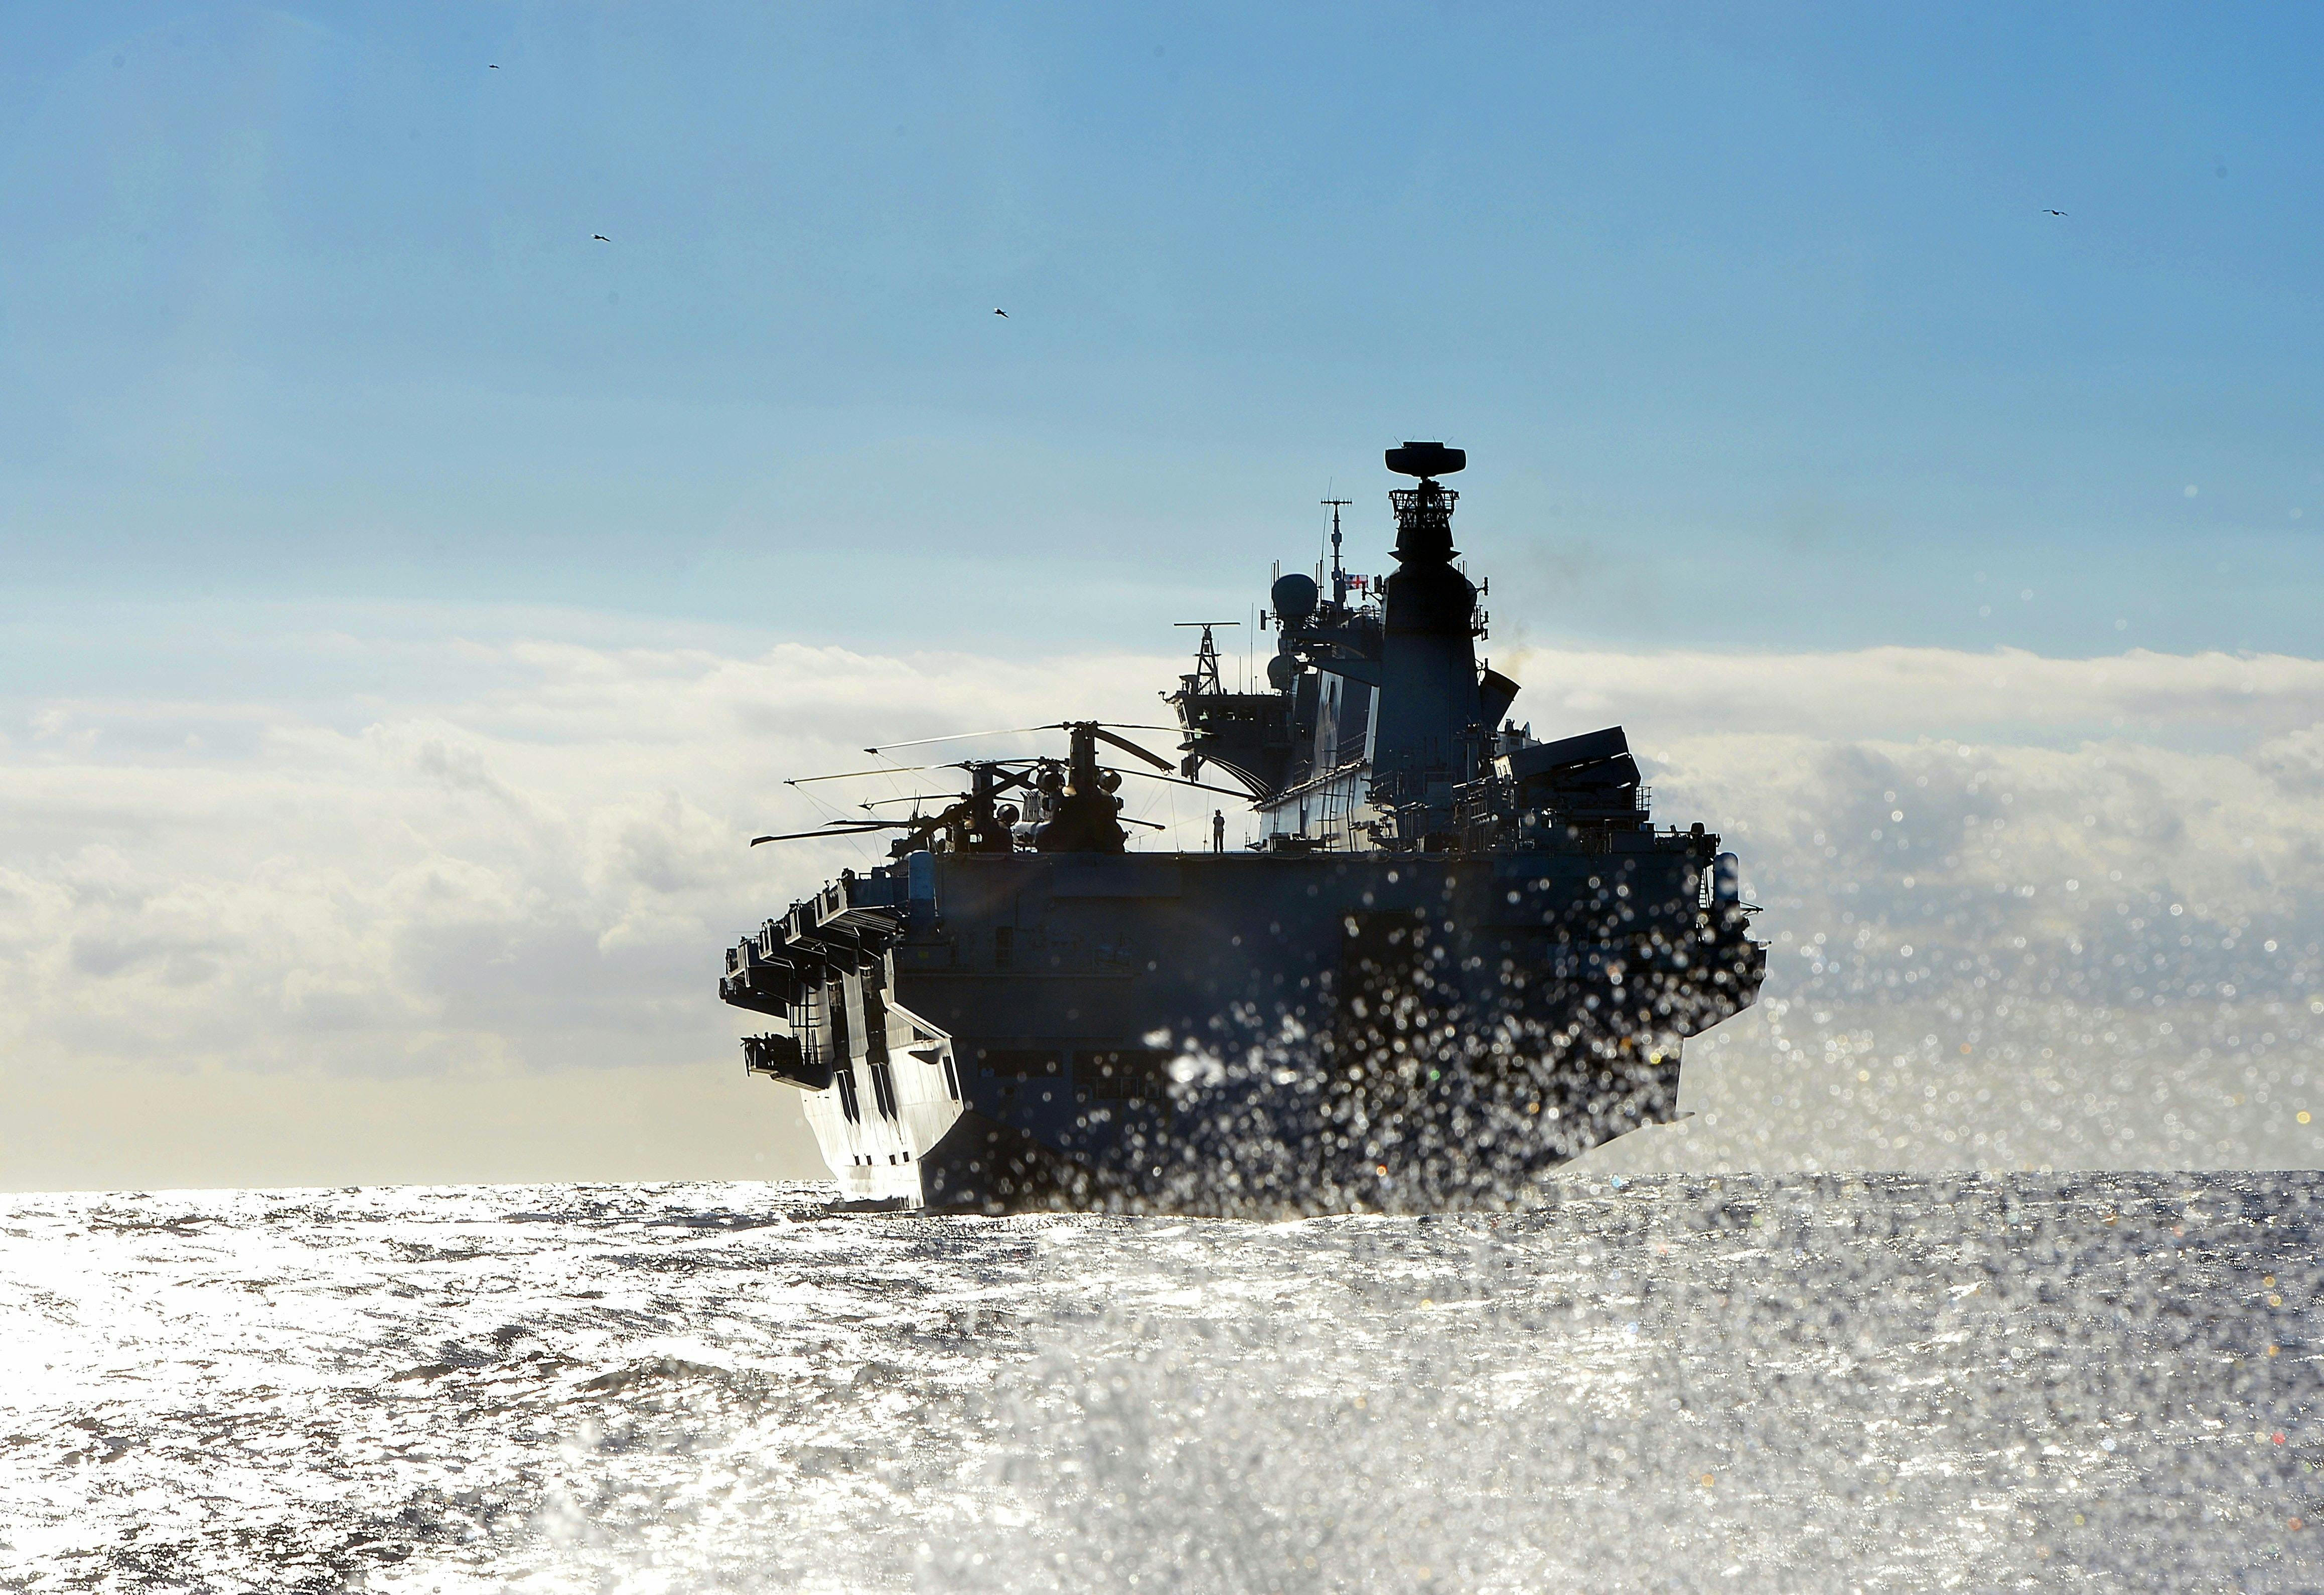 Why is Brazil buying HMS Ocean anyway?